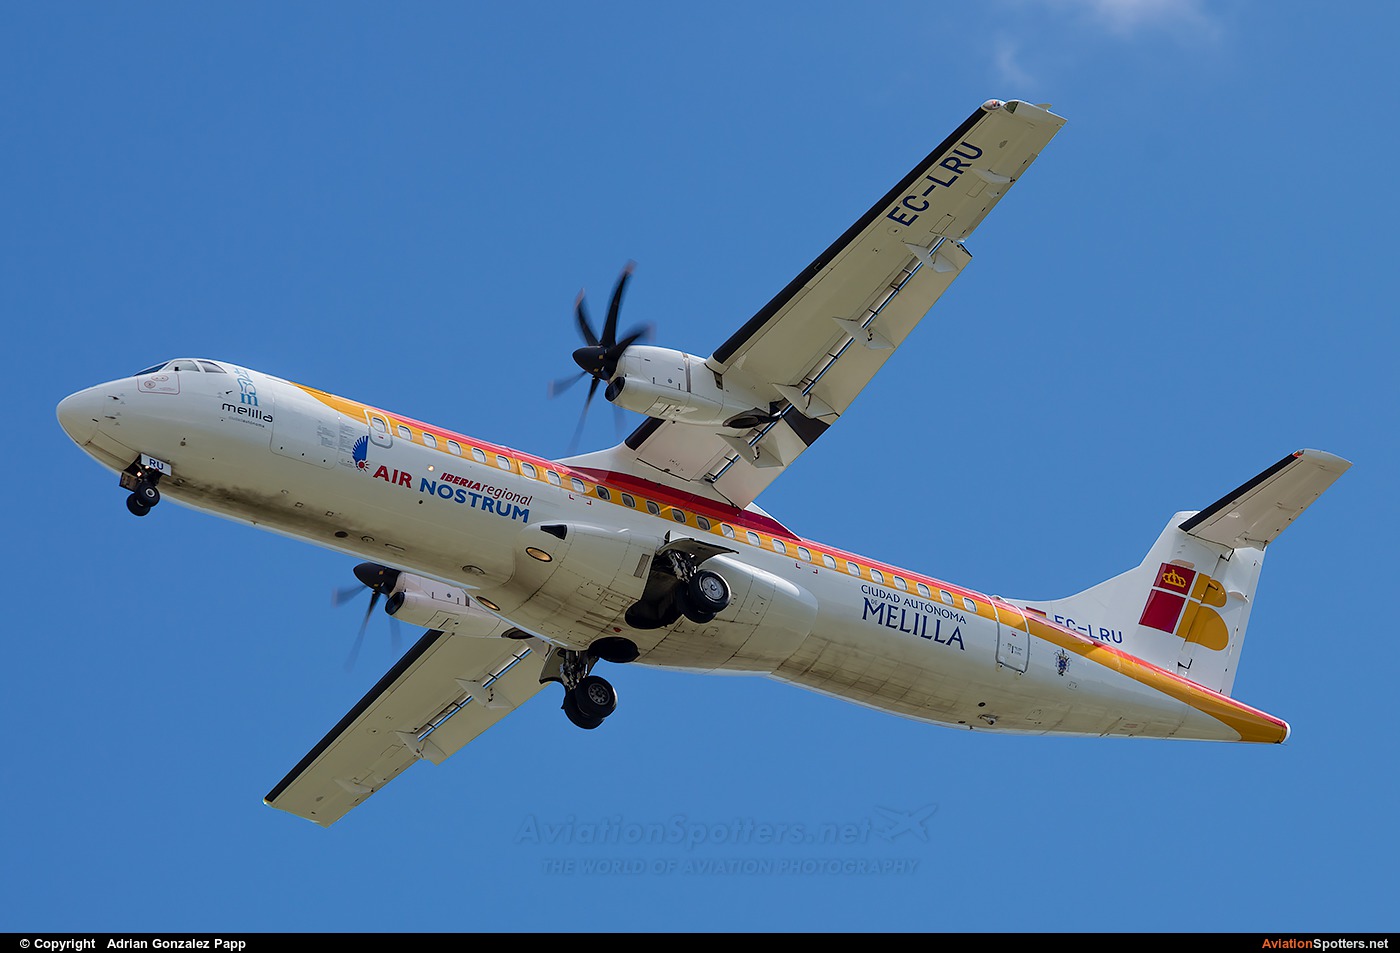 Air Nostrum - Iberia Regional  -  72-600  (EC-LRU) By Adrian Gonzalez Papp (agp12)